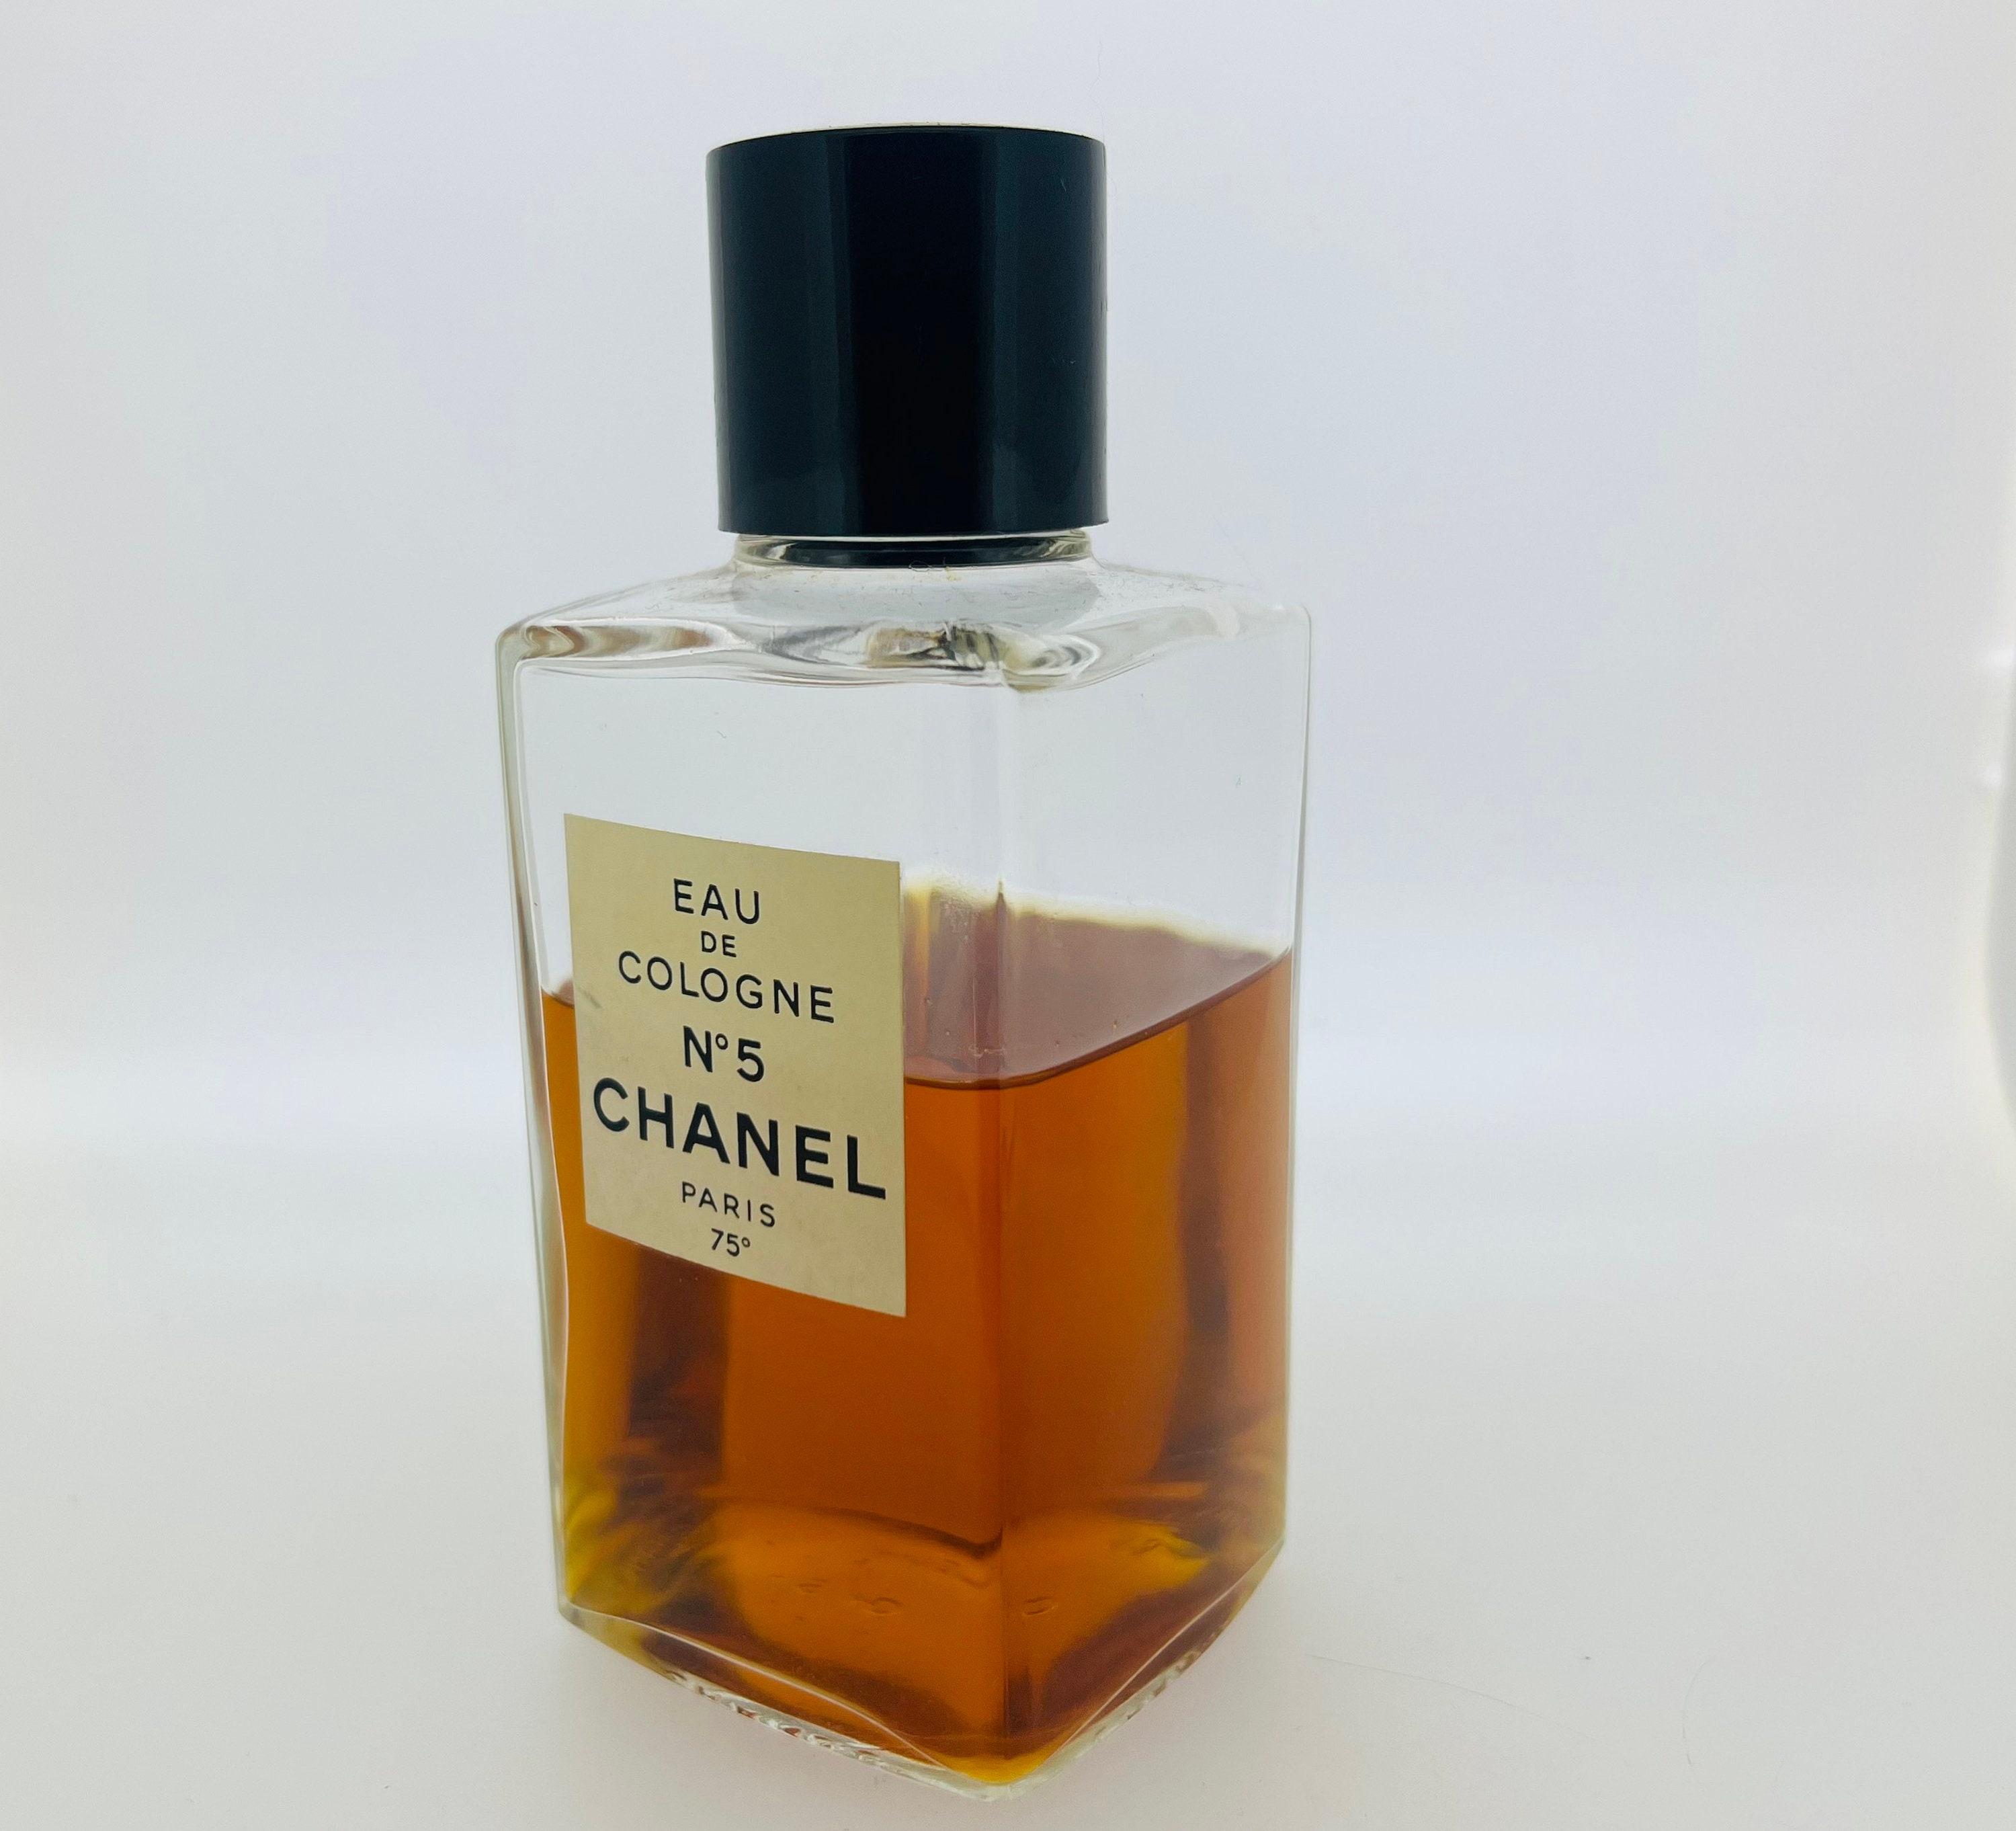 Chanel No.5 Eau de Parfum 3x20ml (Refill) For Women